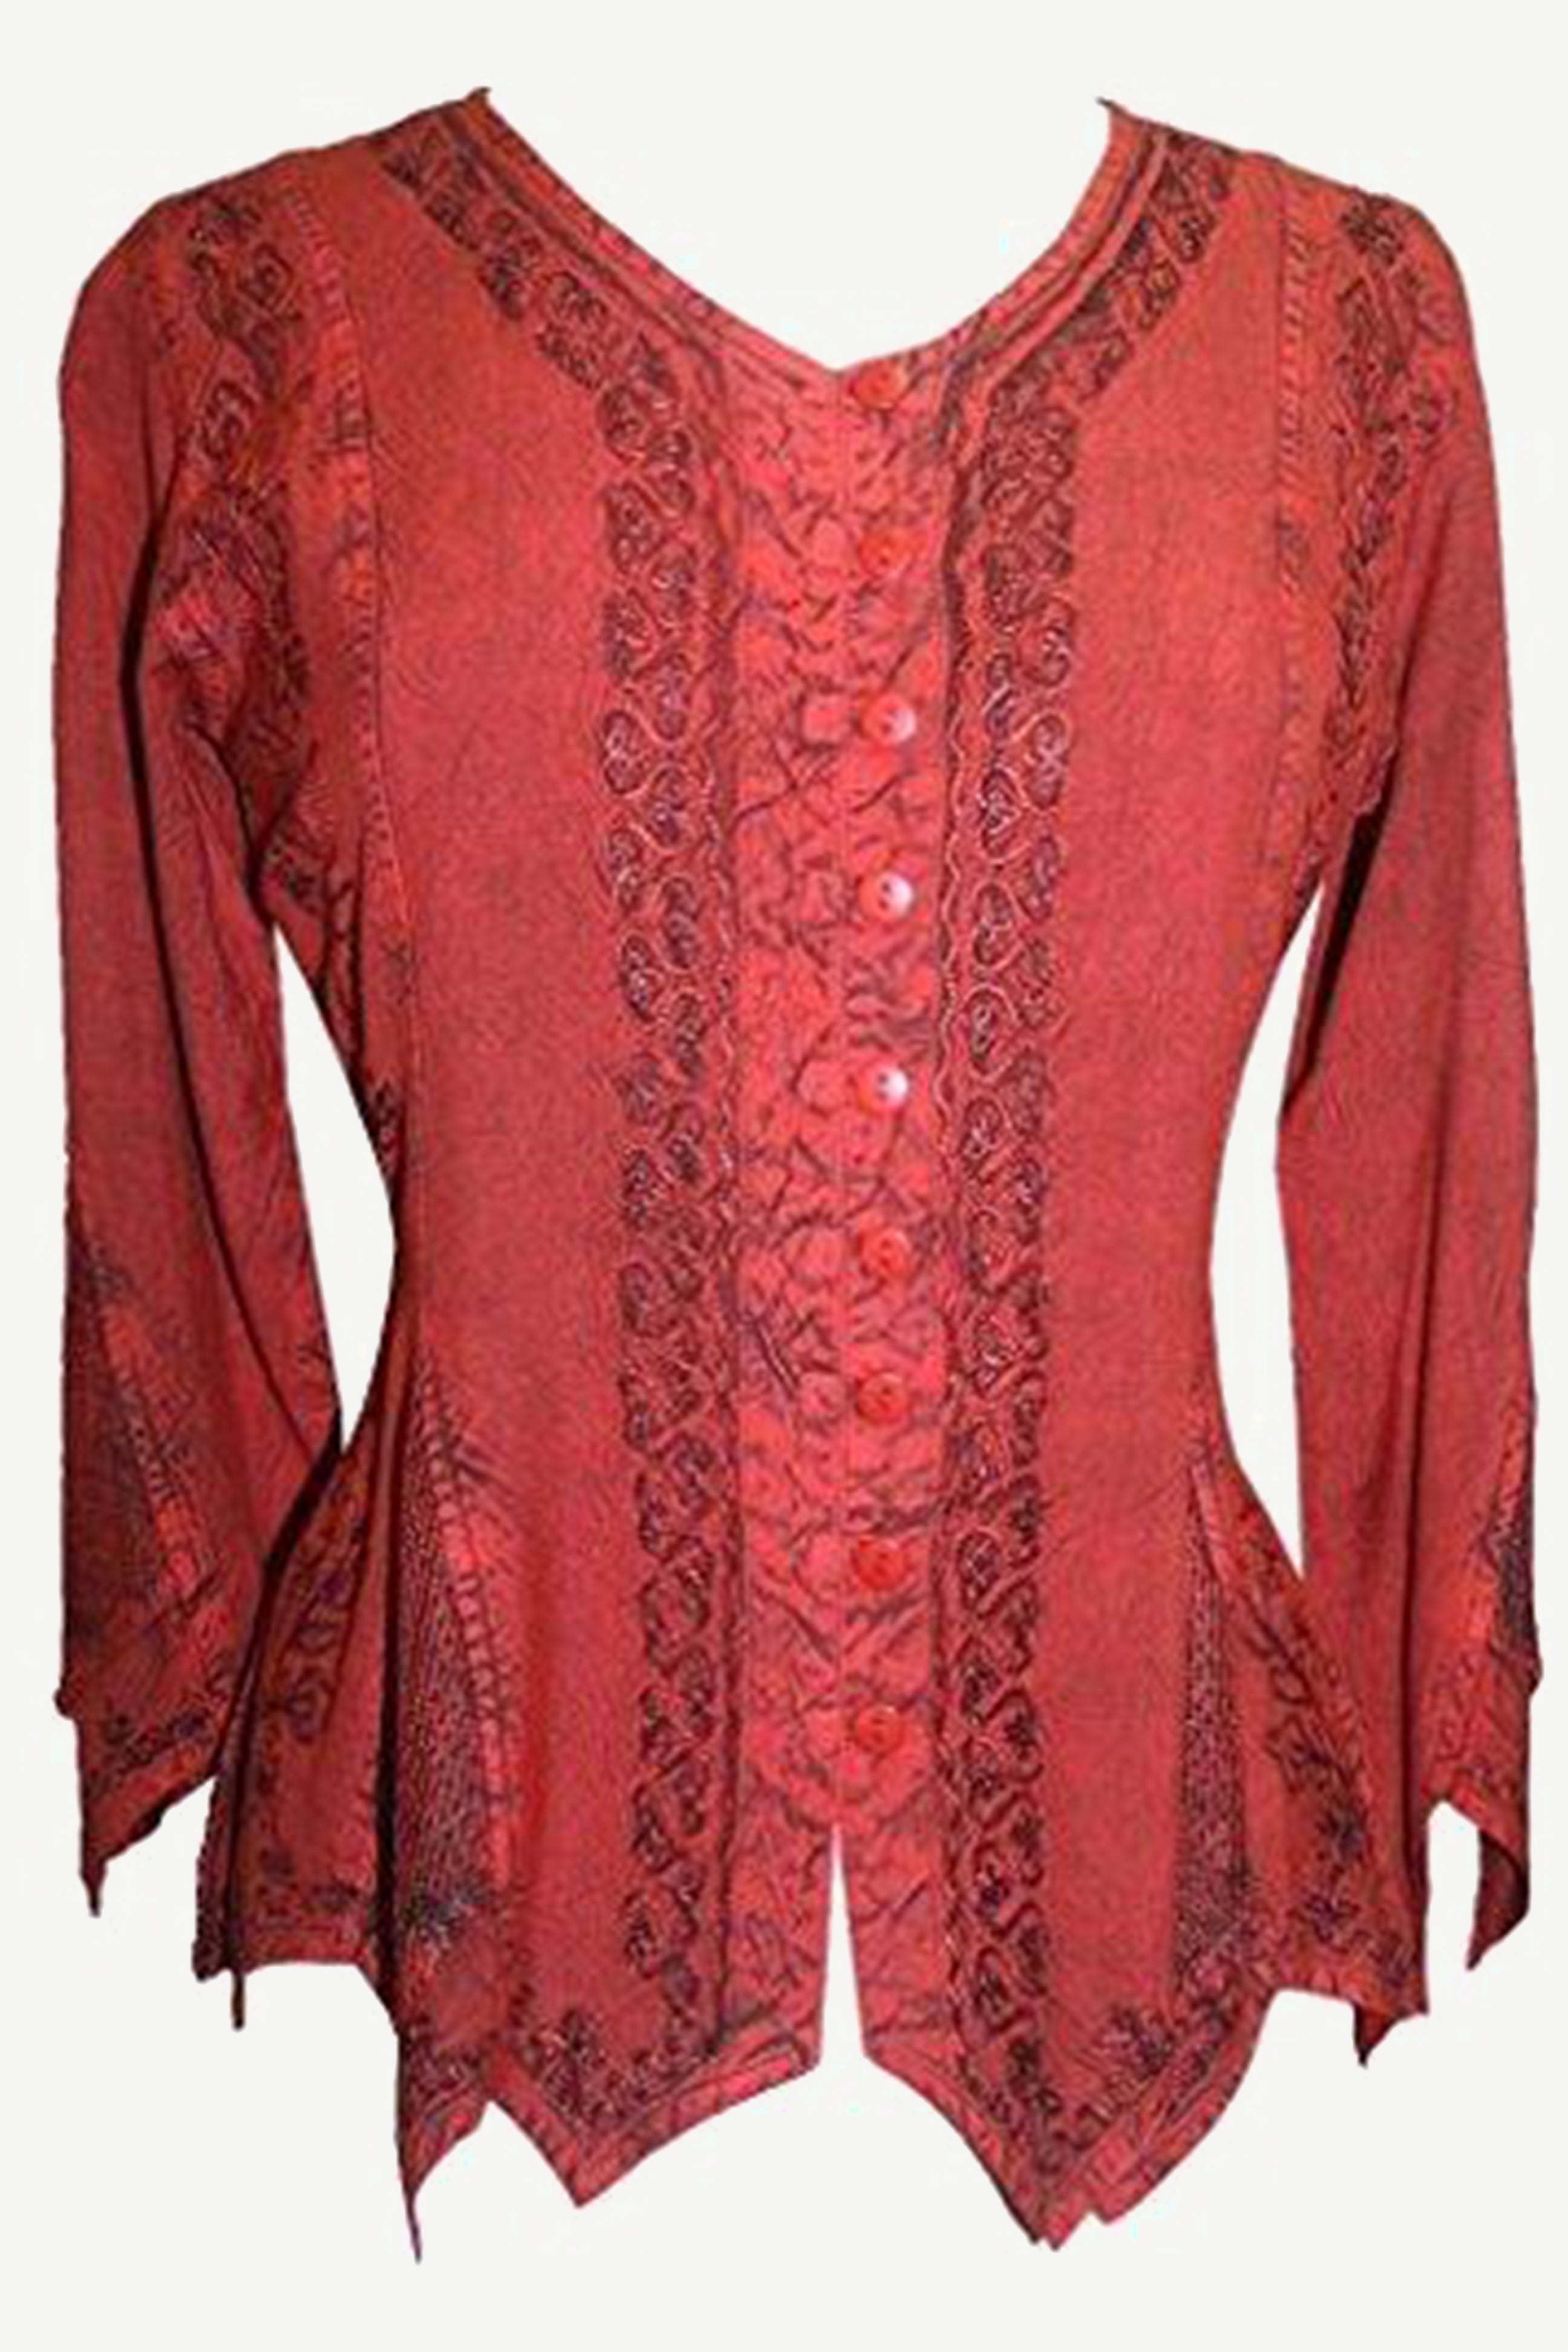 107 B Gypsy Medieval Vintage Asymmetrical Net Renaissance Top Blouse | eBay